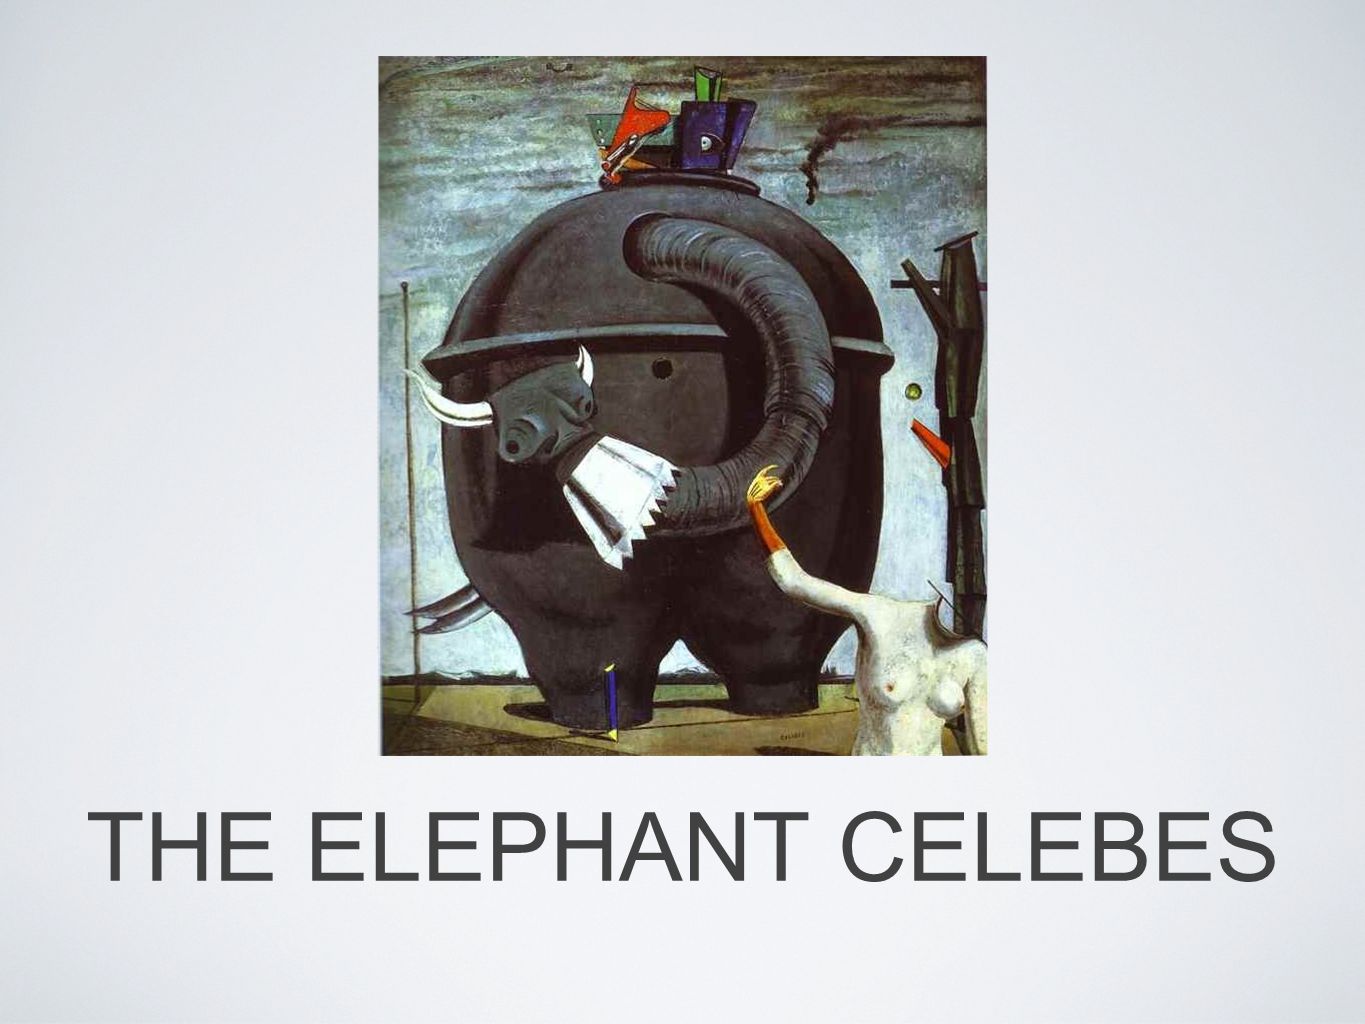 THE ELEPHANT CELEBES